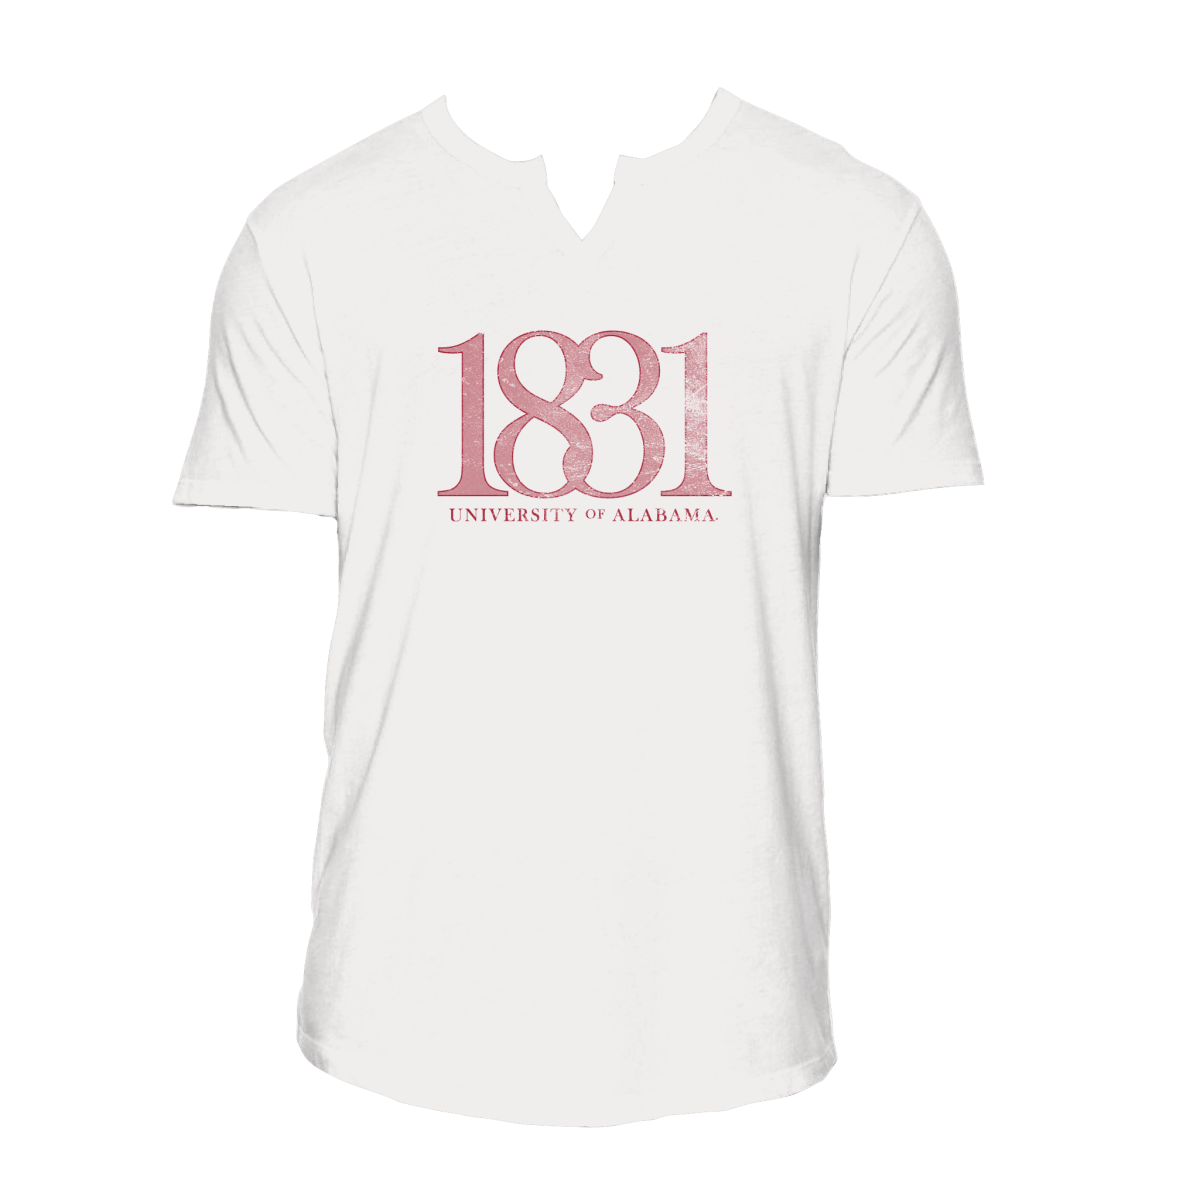 University of Alabama Founded 1831 T-Shirt - Shop B-Unlimited